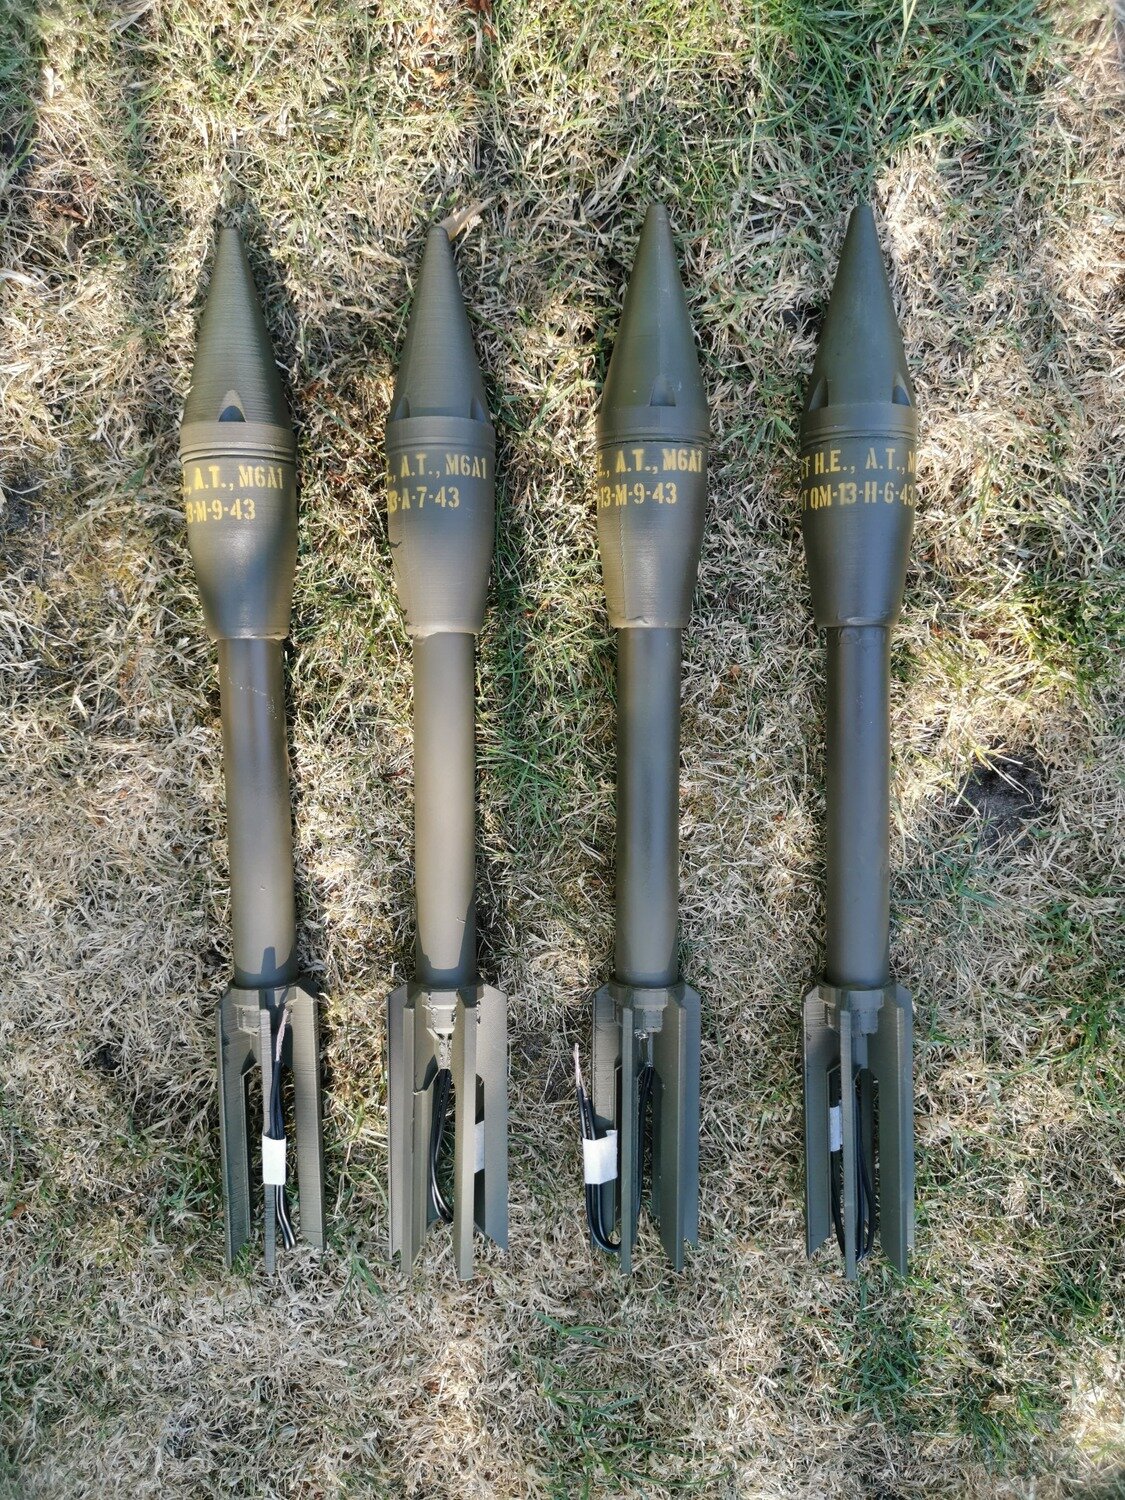 M6A1 Bazooka rocket stencils set including the tube stencils